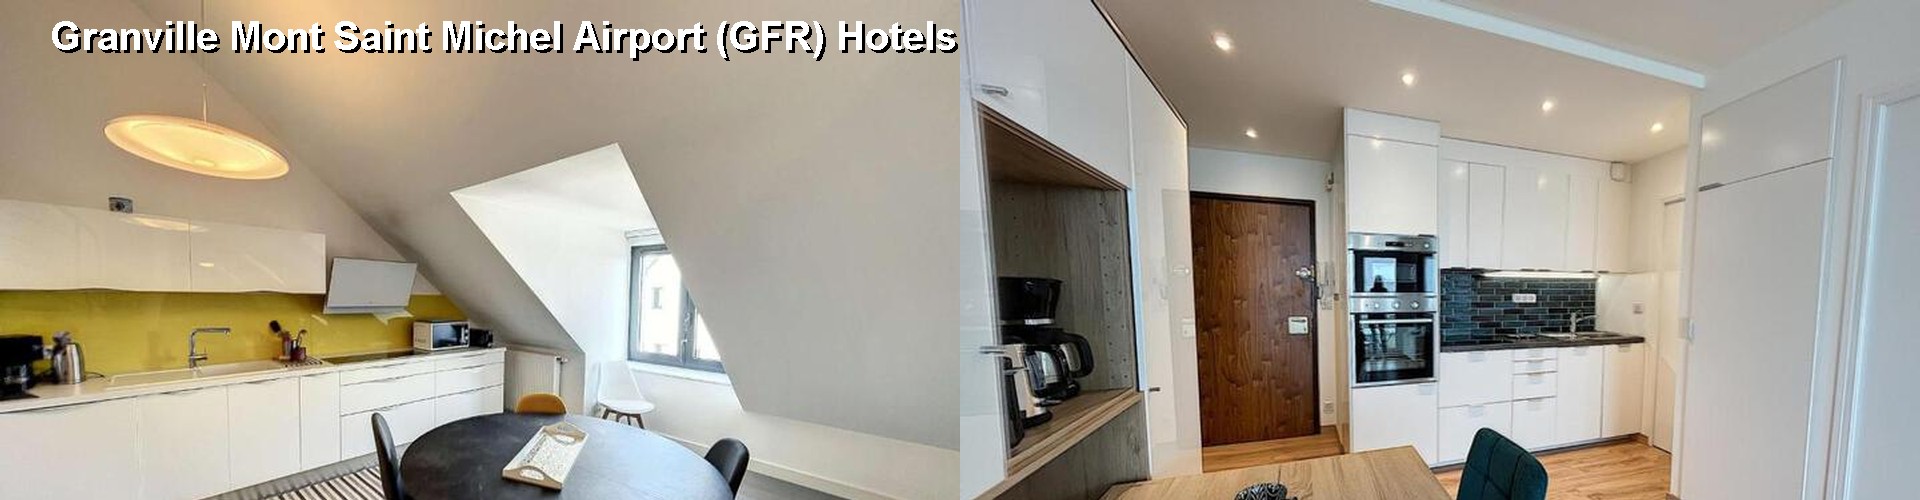 5 Best Hotels near Granville Mont Saint Michel Airport (GFR)